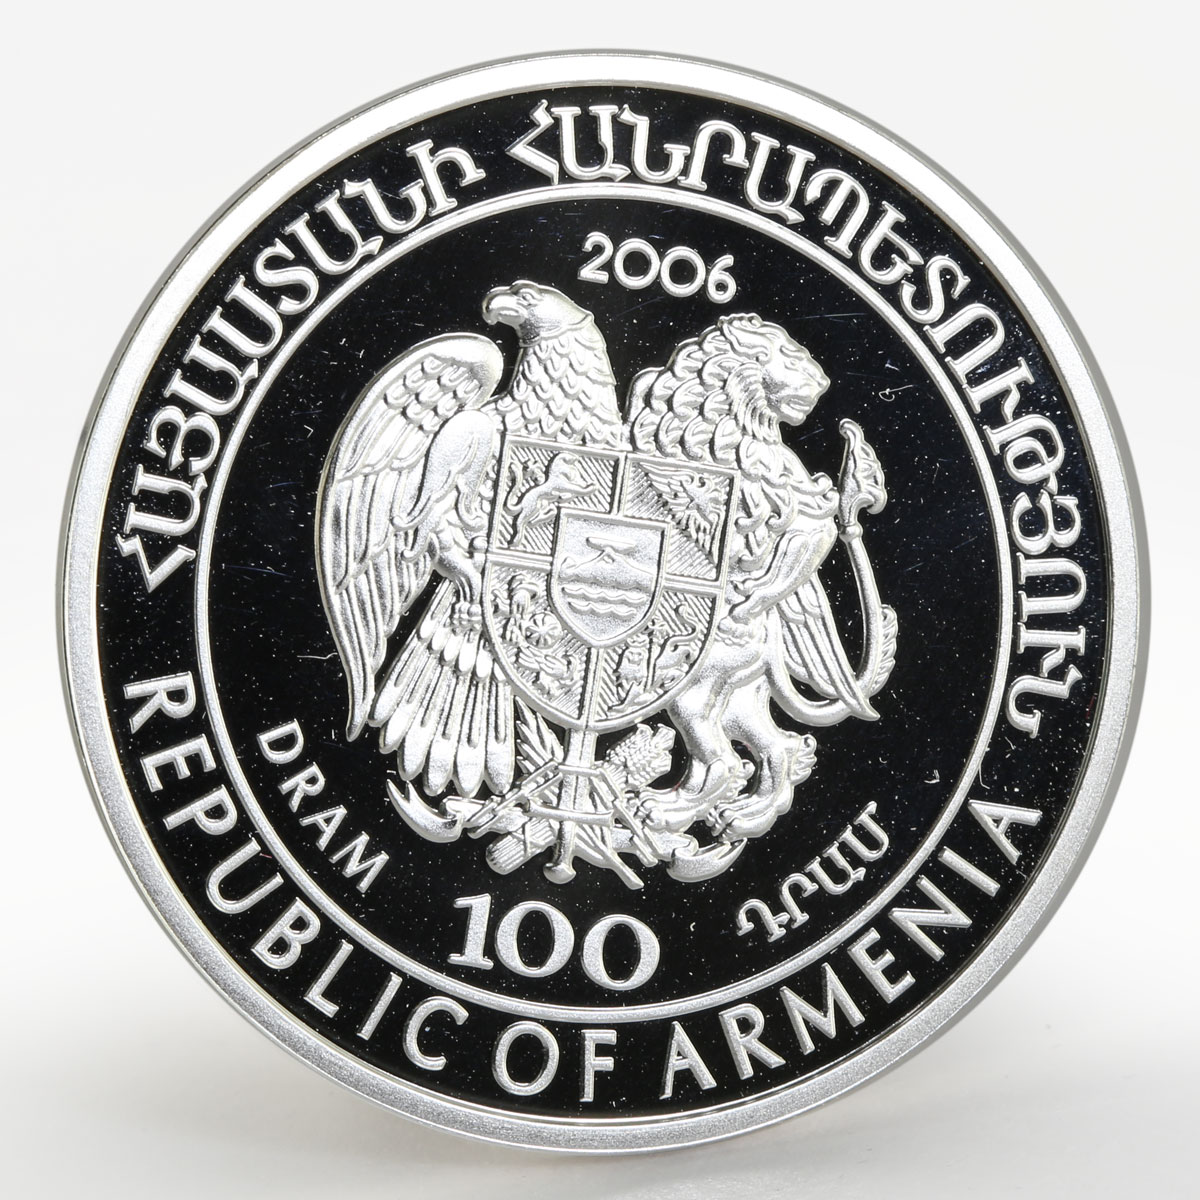 Armenia 100 dram Caucasus Wild series The Wide - Eared Hedhehog silver coin 2006